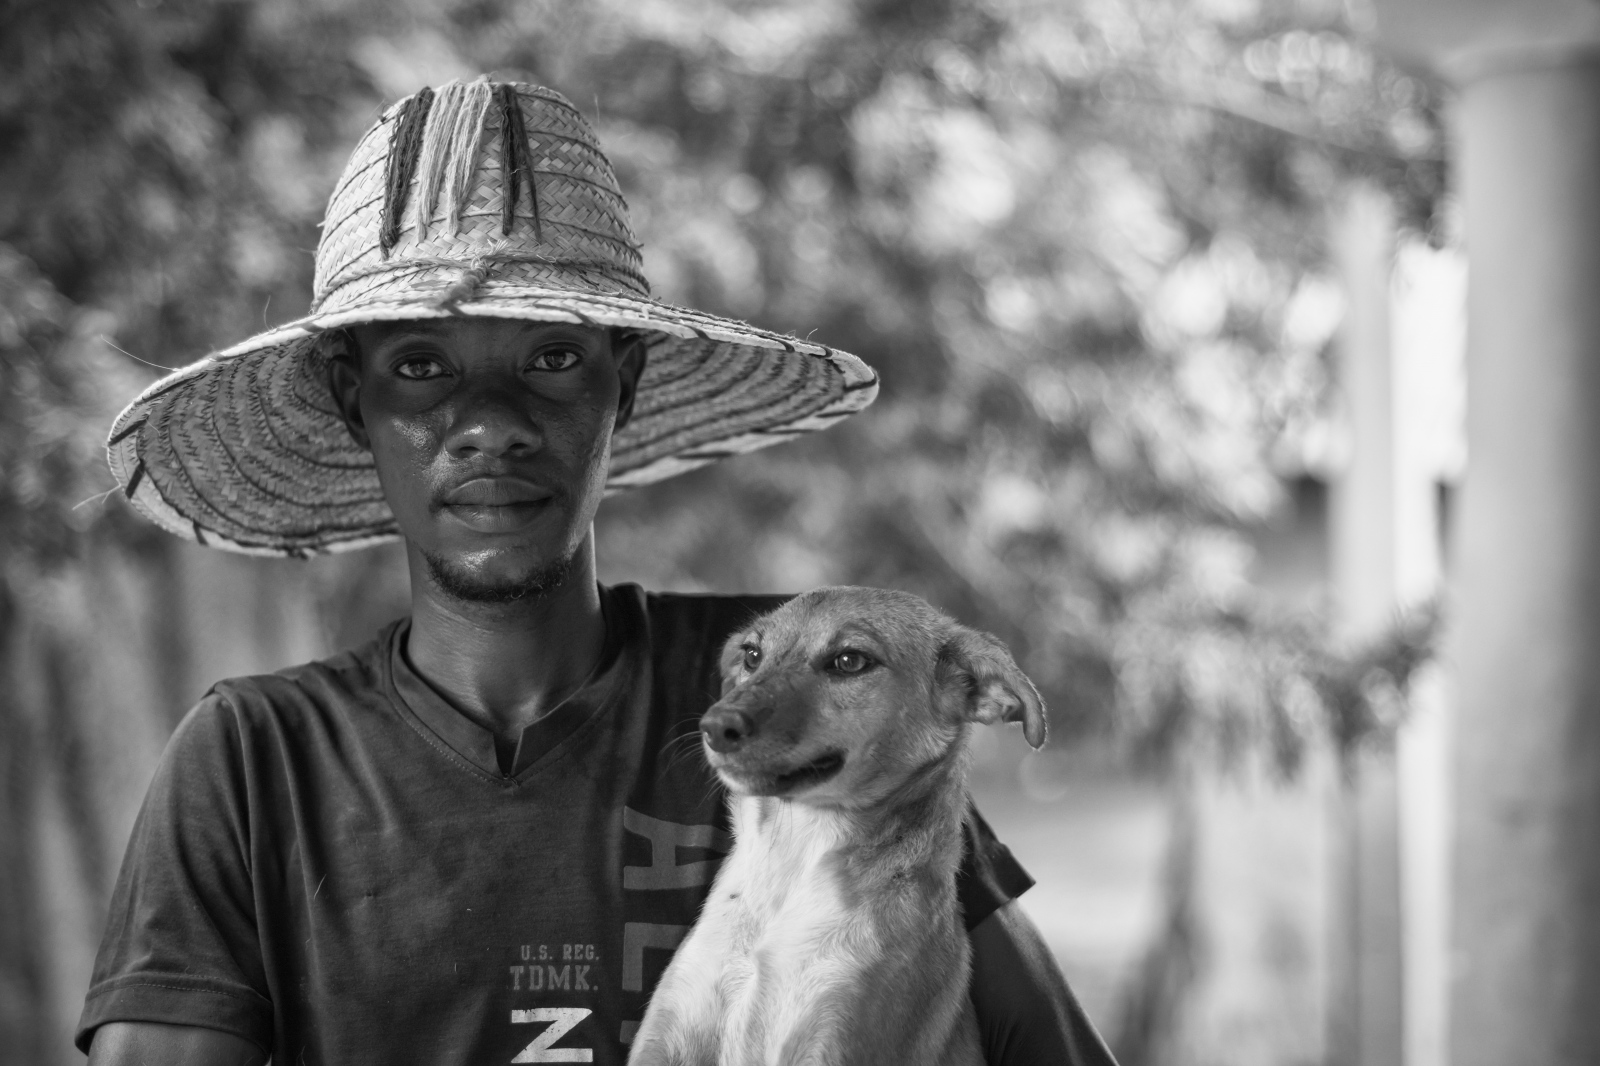 Haiti Portraits | Buy this image